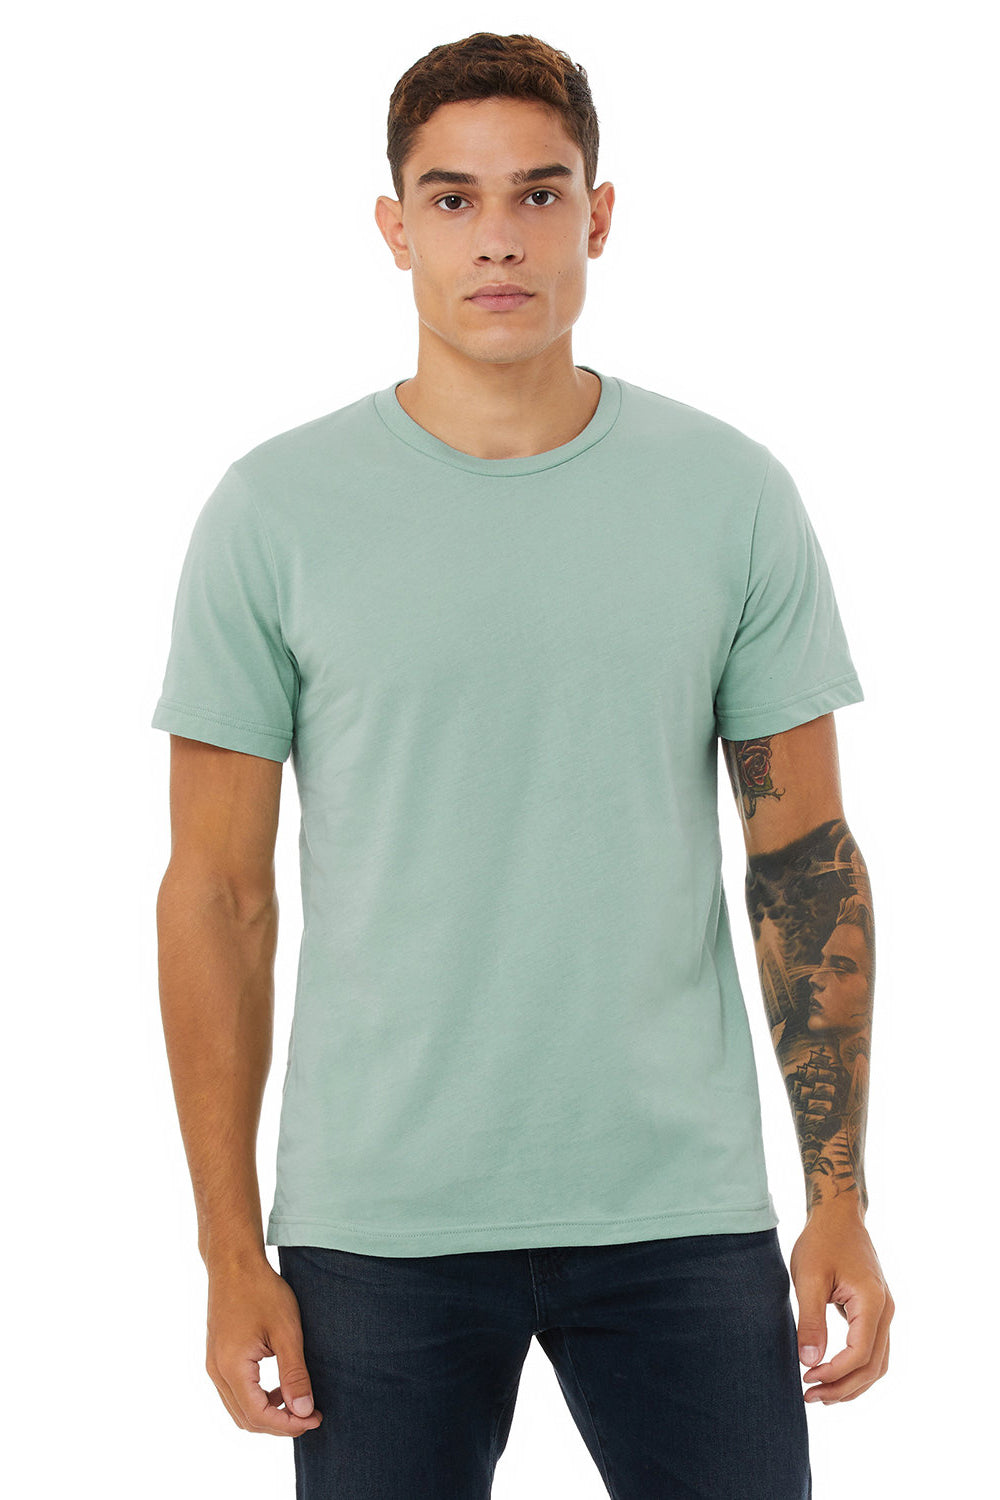 Bella + Canvas BC3001/3001C Mens Jersey Short Sleeve Crewneck T-Shirt Dusty Blue Model Front